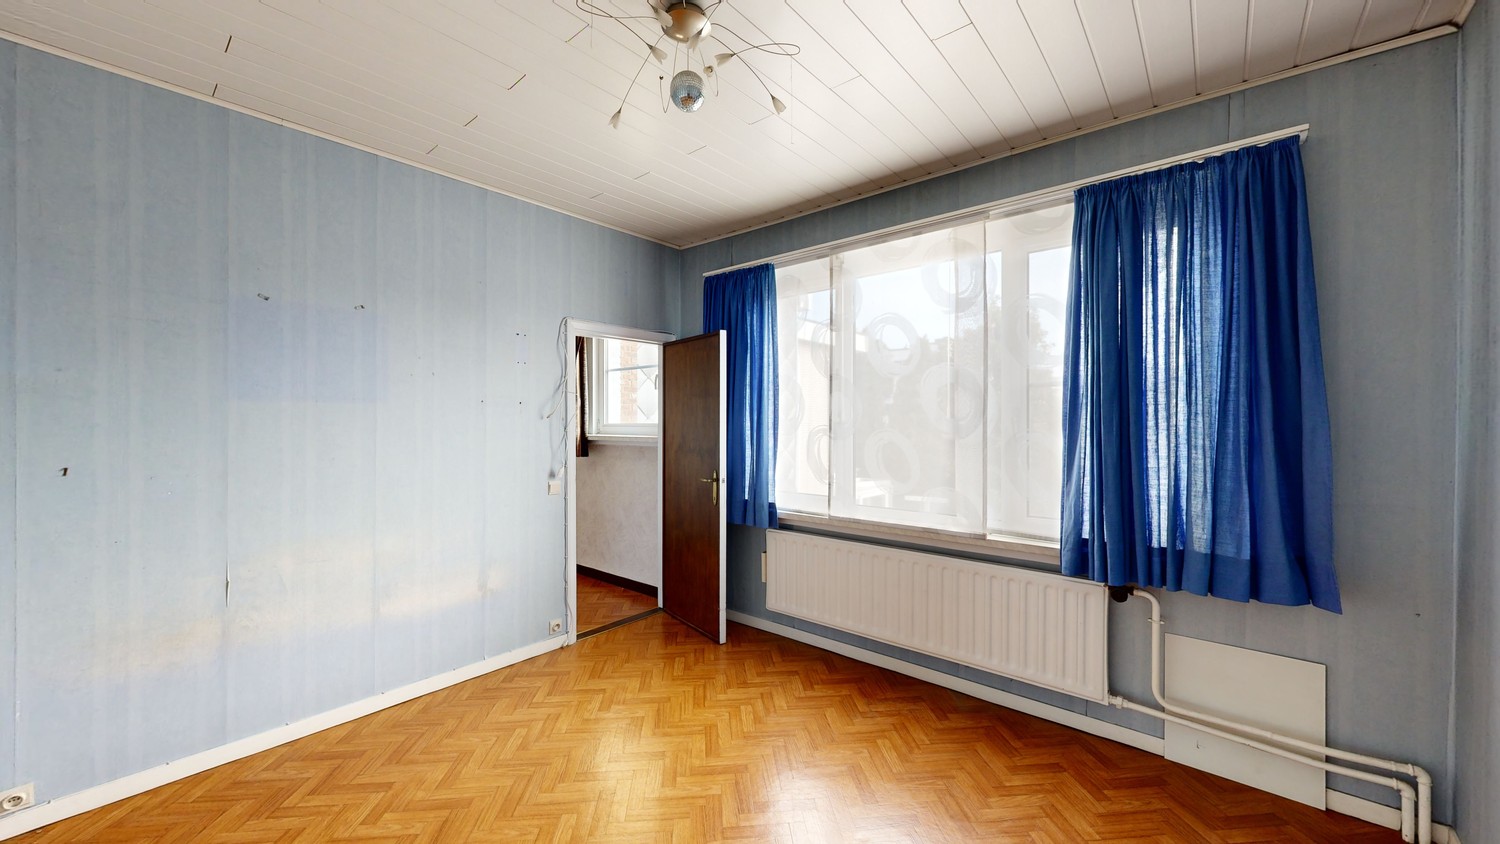 Bel-étage te koop met 2 slaapkamers en tuin in de bruisende Pulhof wijk. afbeelding 9